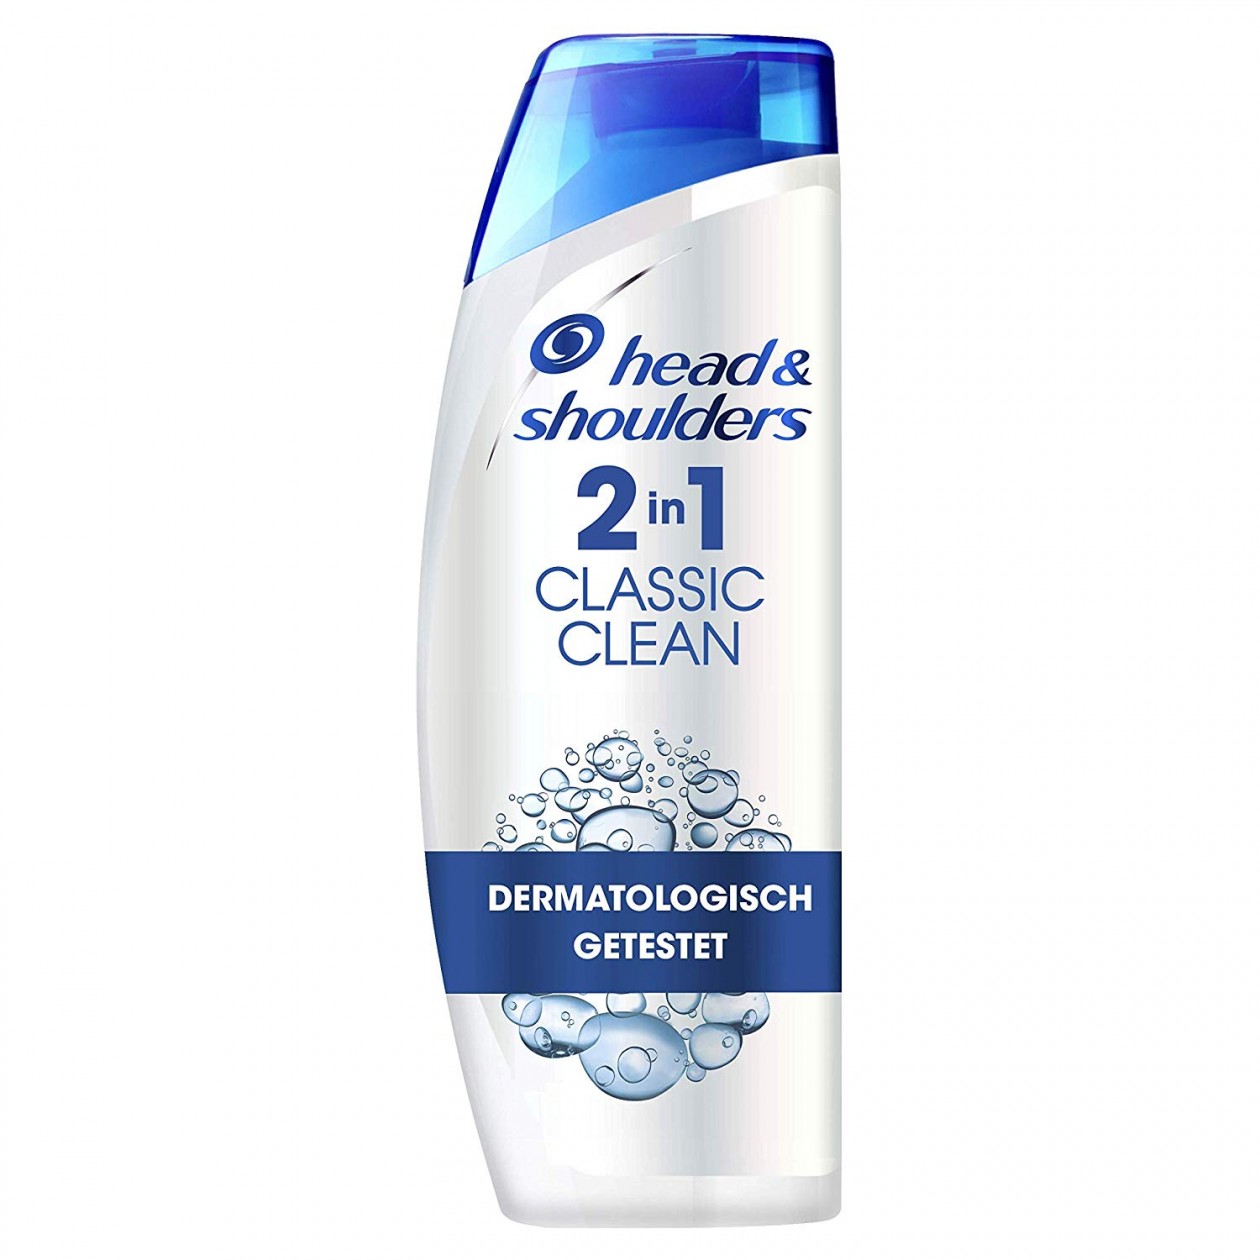 Head & Shoulders Shampoo Classic Clean 2in1 200mL